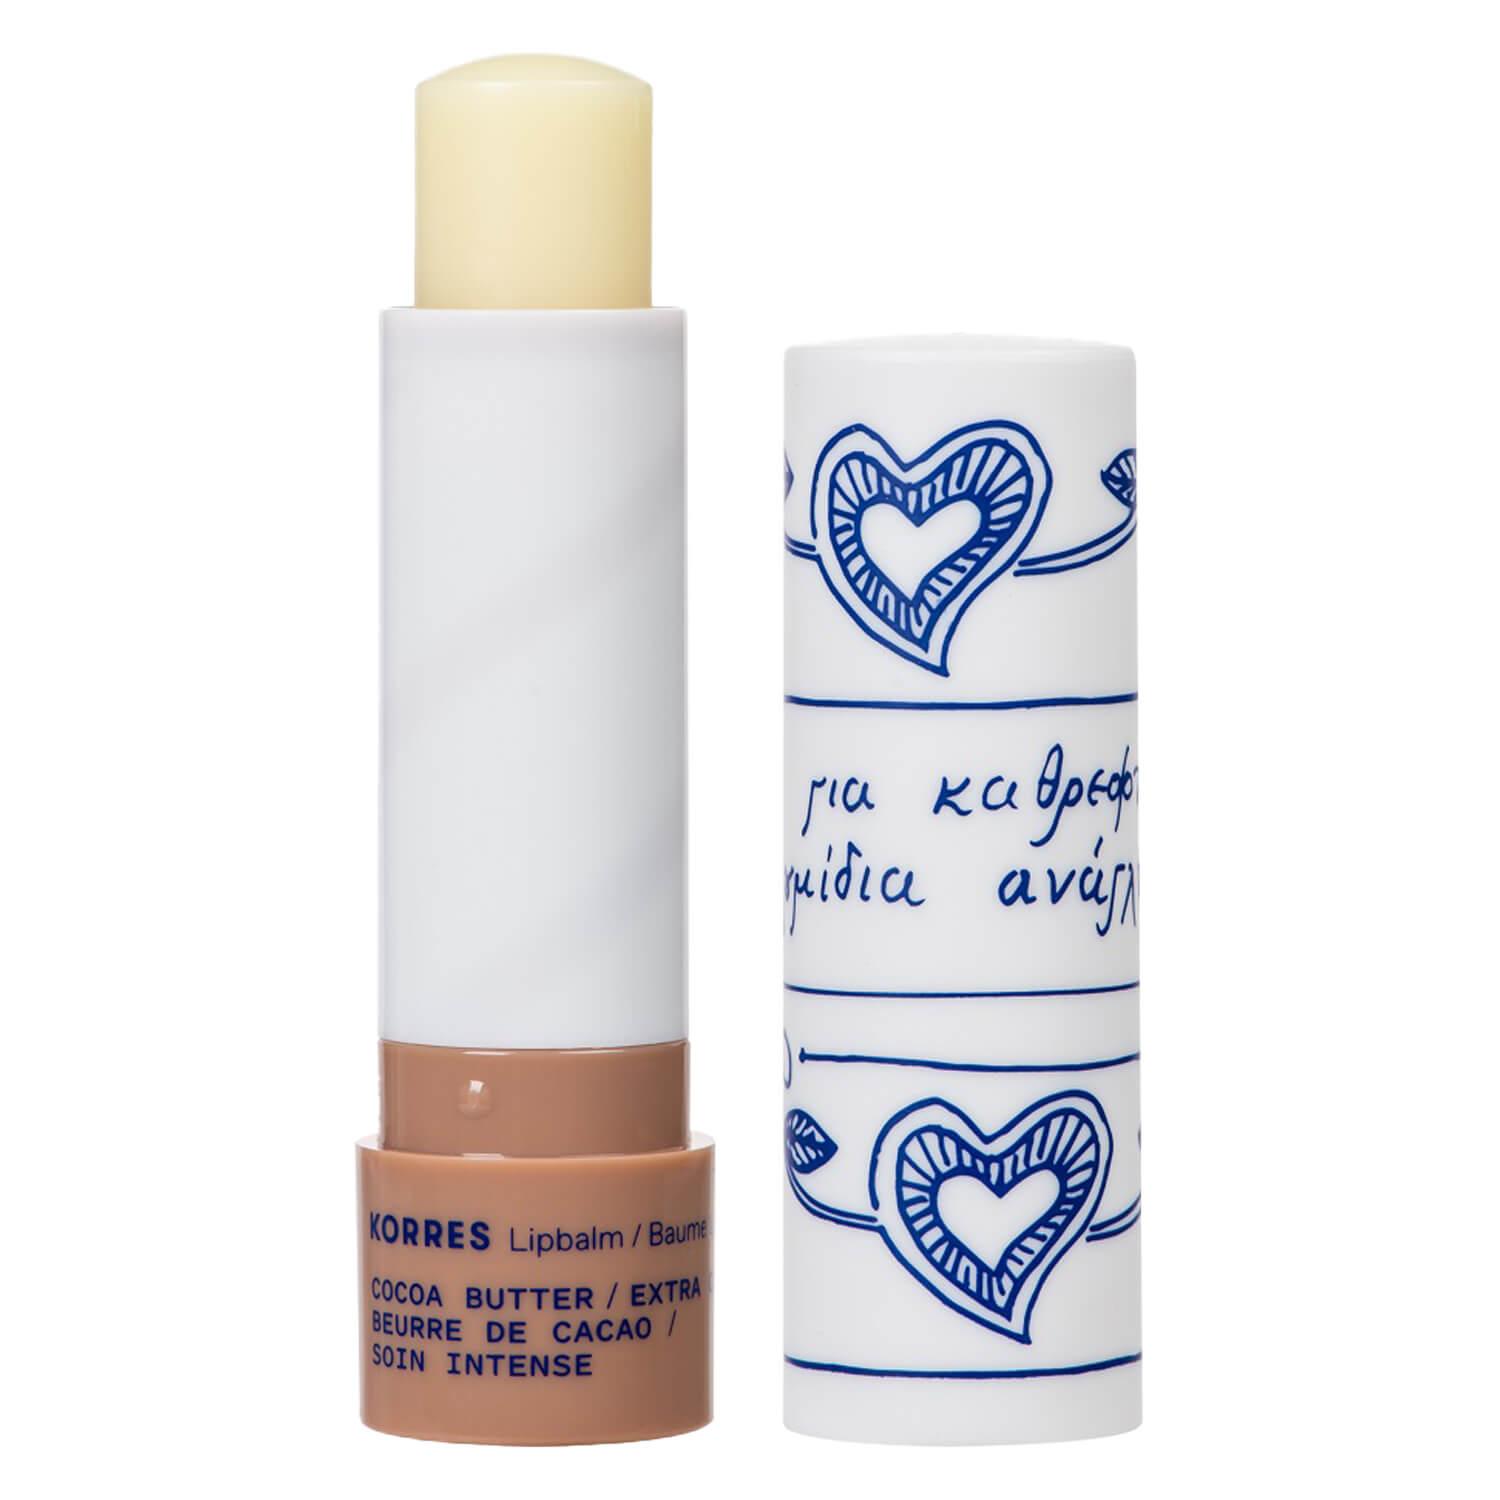 Korres Lips - Cocoa Butter Lip Balm